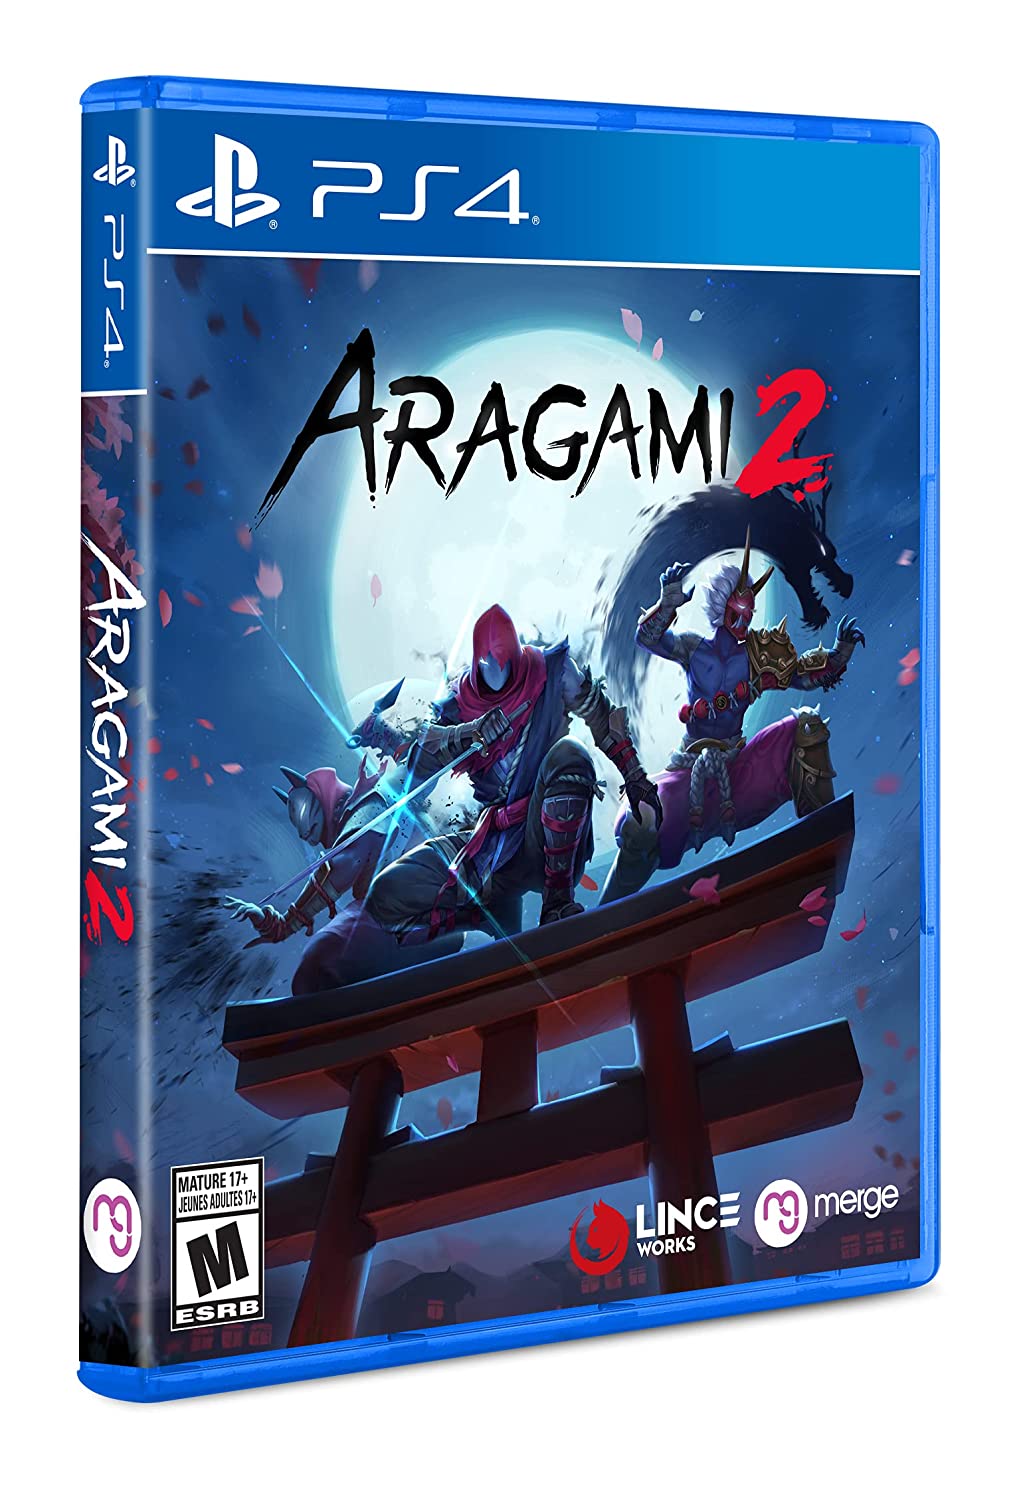 Aragami 2 - (PS4) PlayStation 4 Video Games Merge Games   